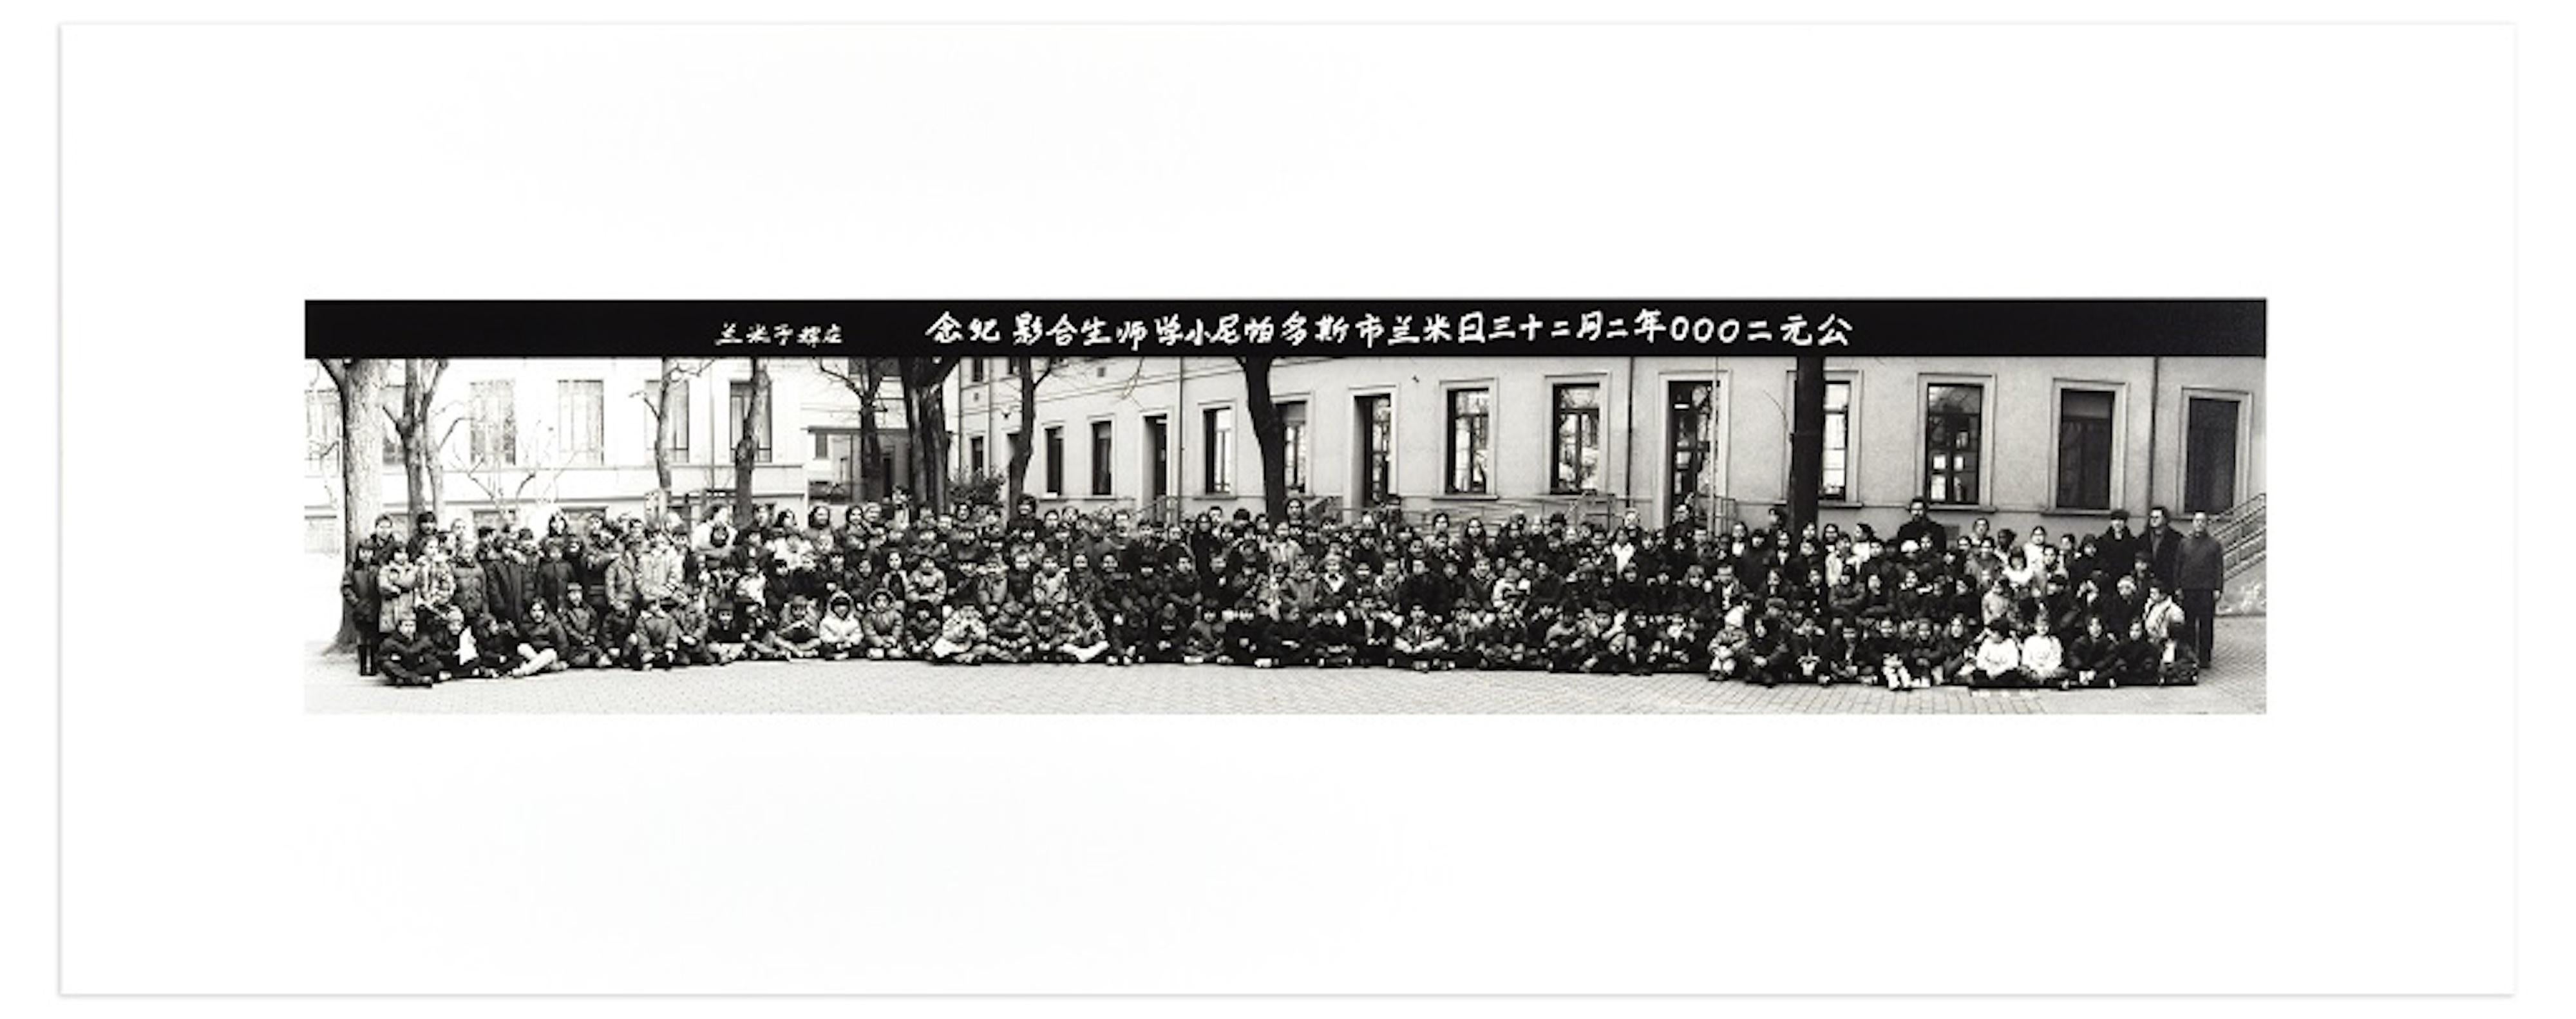 23 February 2000 Stoppani Elementary School - Original Photo by Zhuang Hui, 2000 For Sale 1